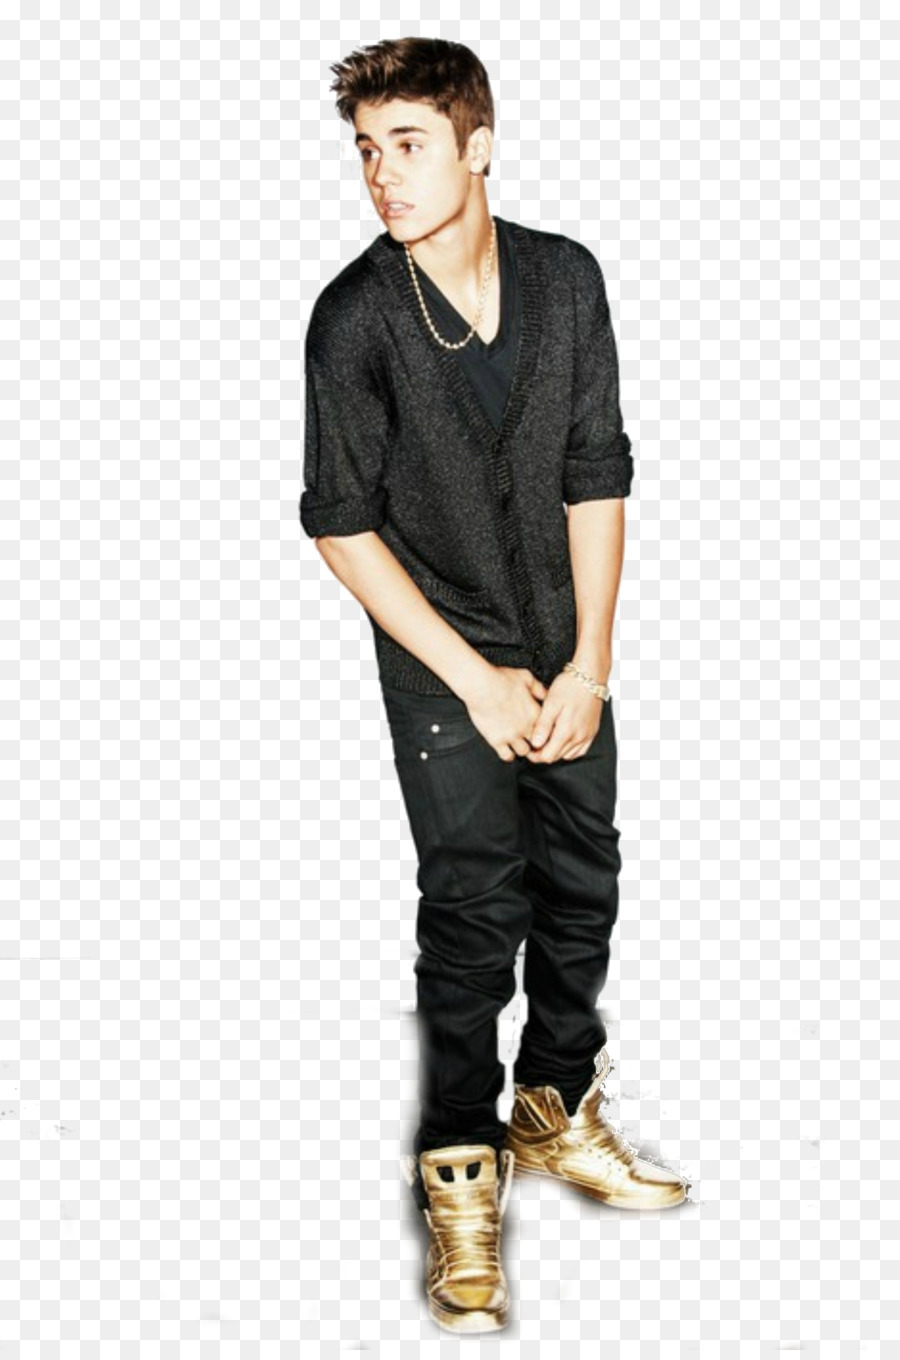 Justin Bieber 0 Photo shoot Believe - justin bieber png download - 900*1350 - Free Transparent  png Download.